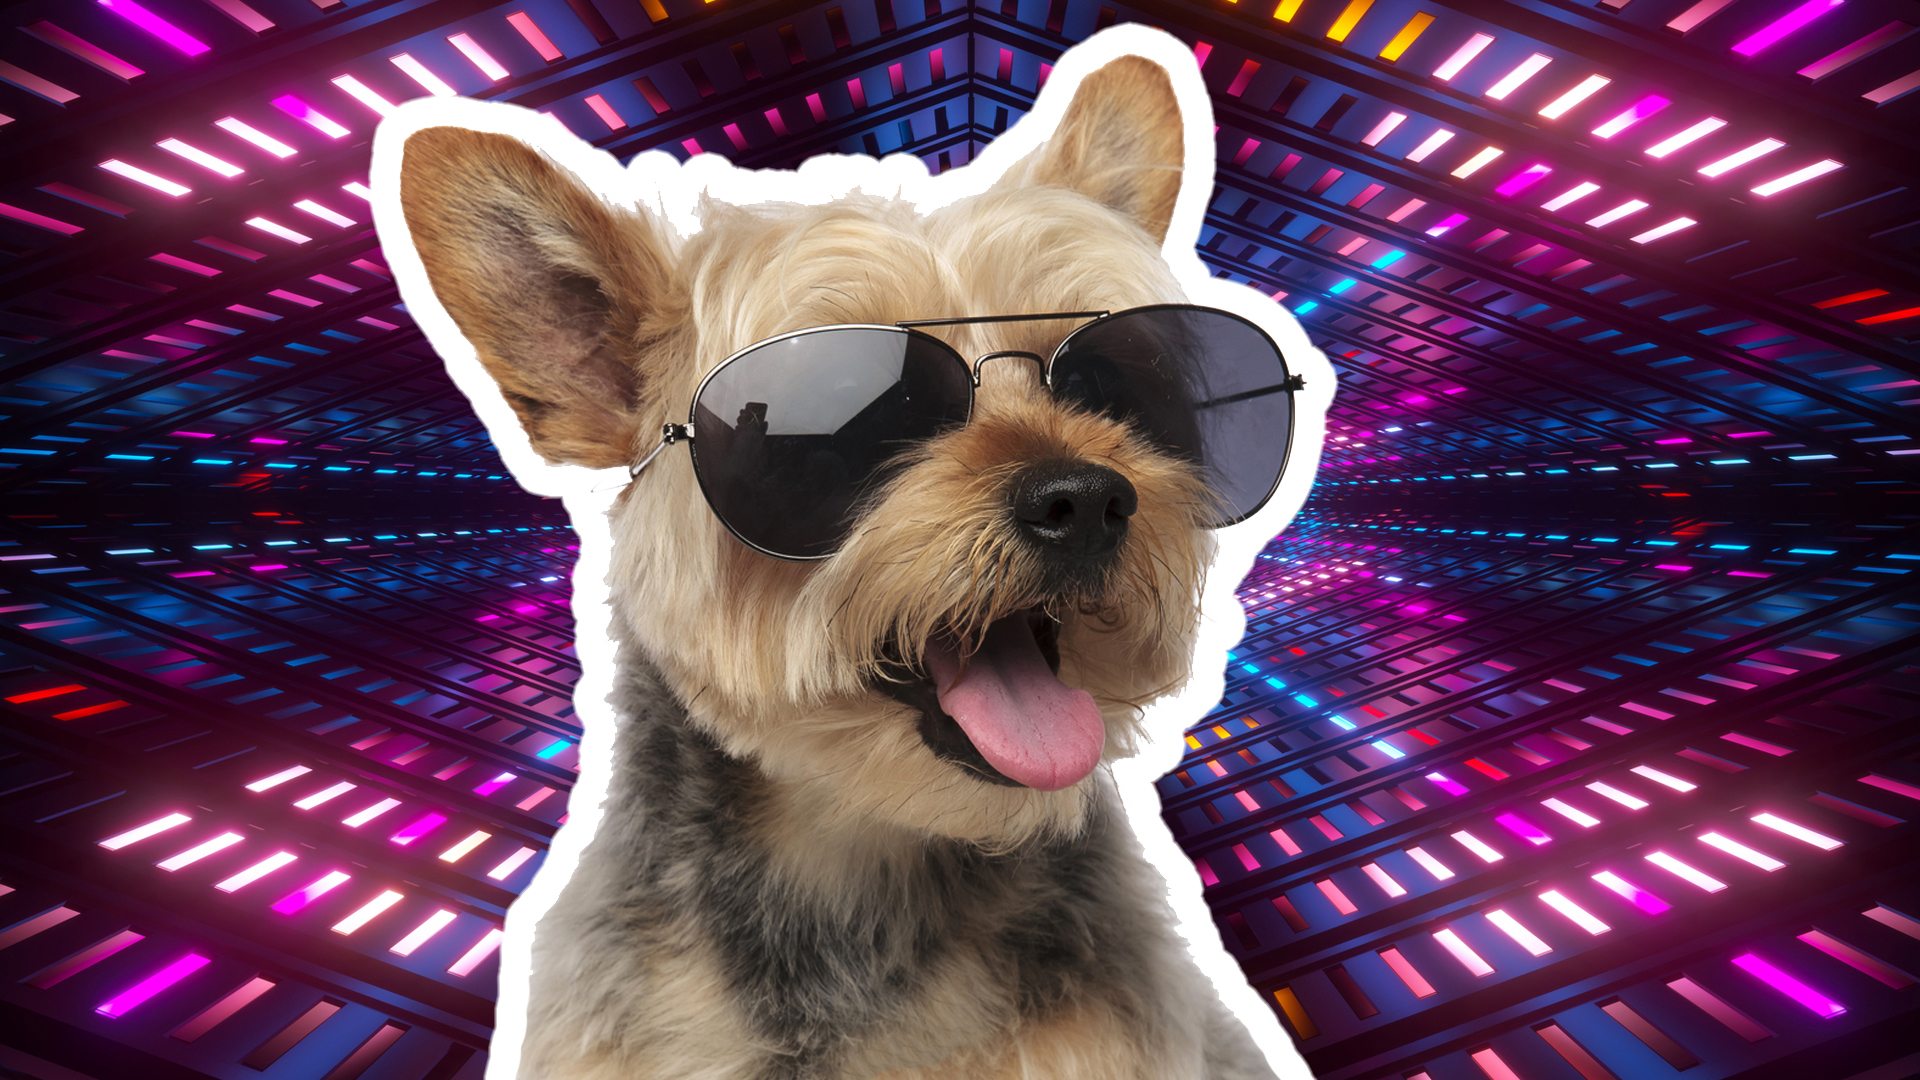 A dog at a disco